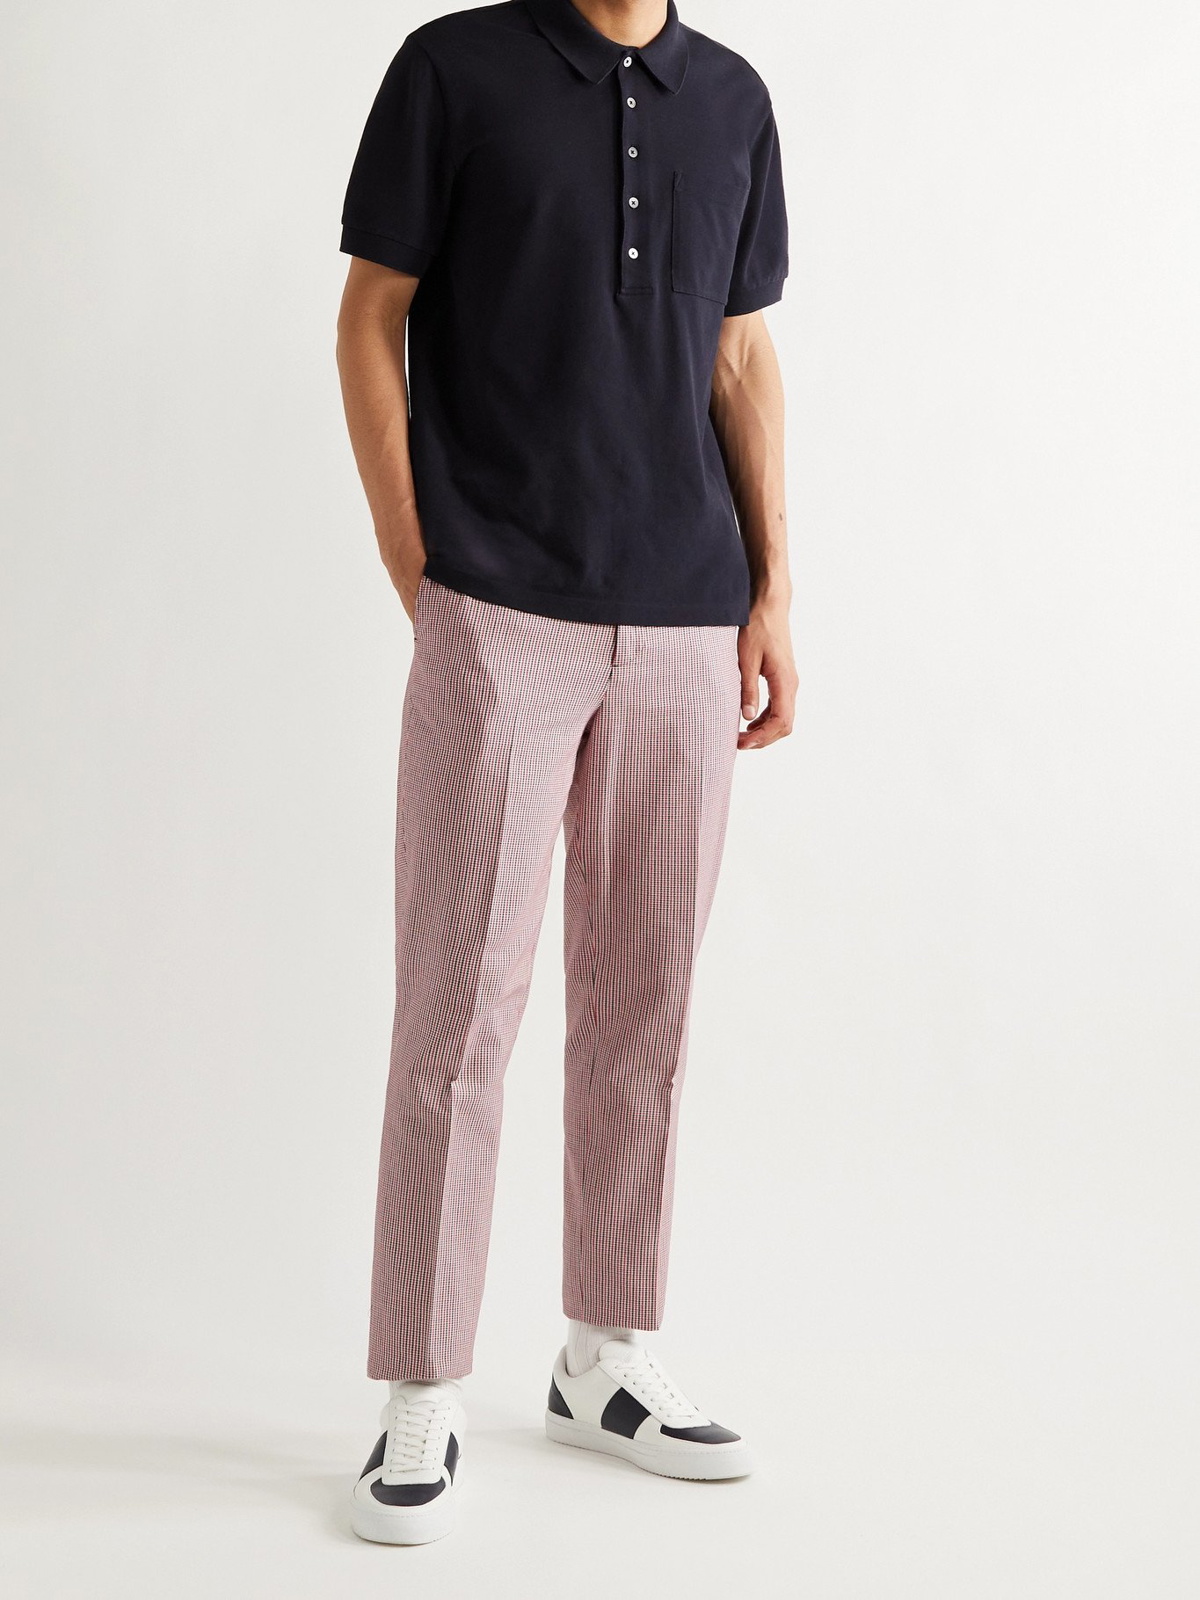 INCOTEX Italy Iconic Slacks Cotton Slim Fit Golf Trousers Chino Pants | eBay